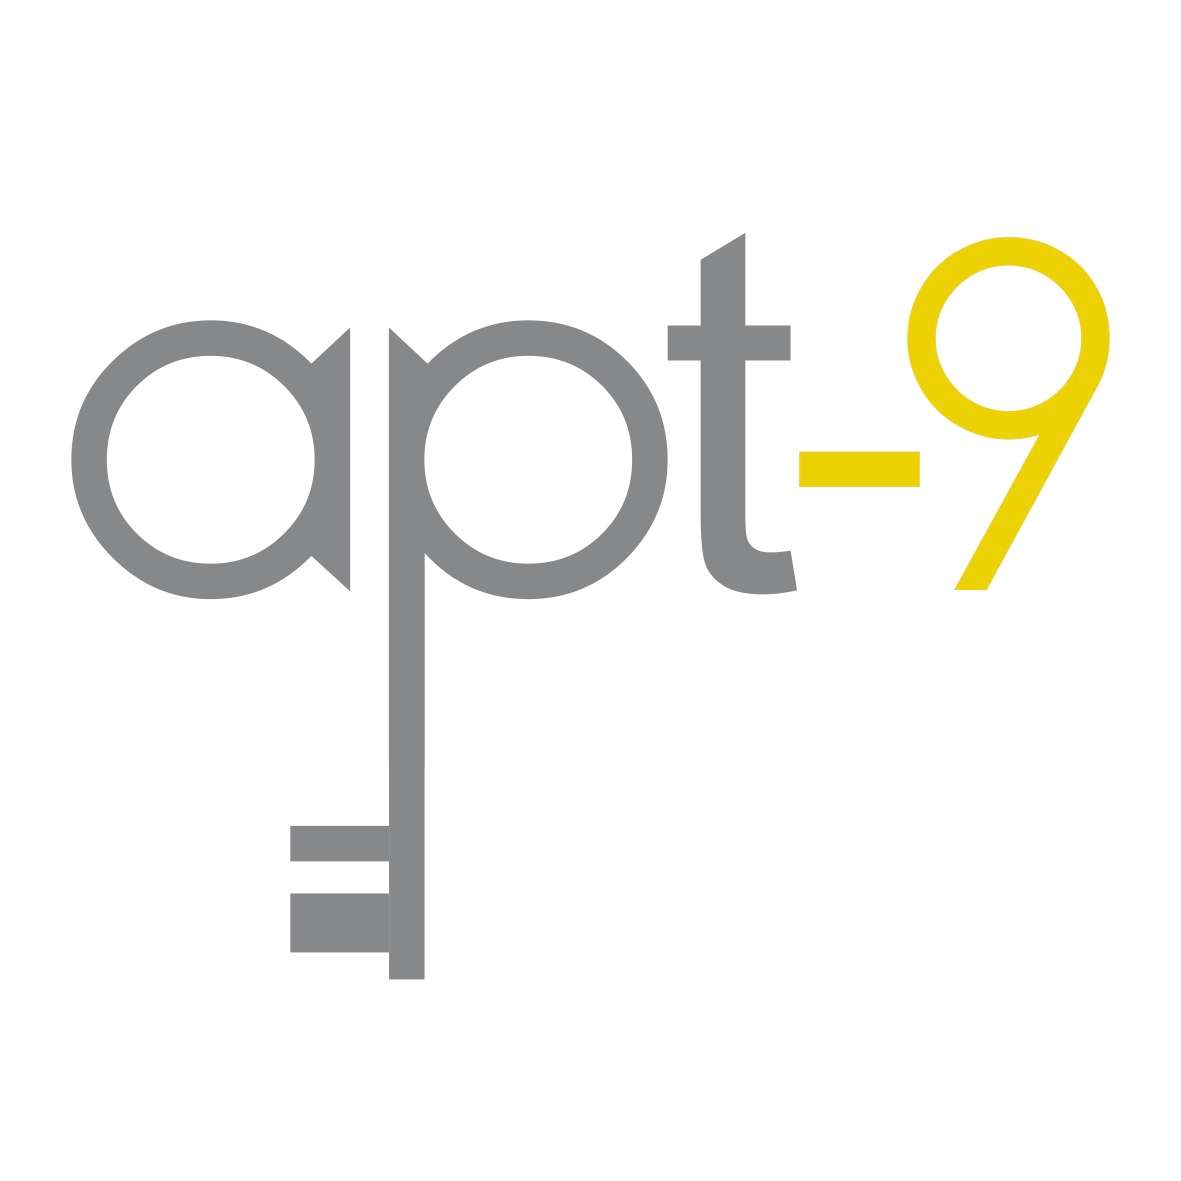 apt-9 - Crunchbase Company Profile & Funding